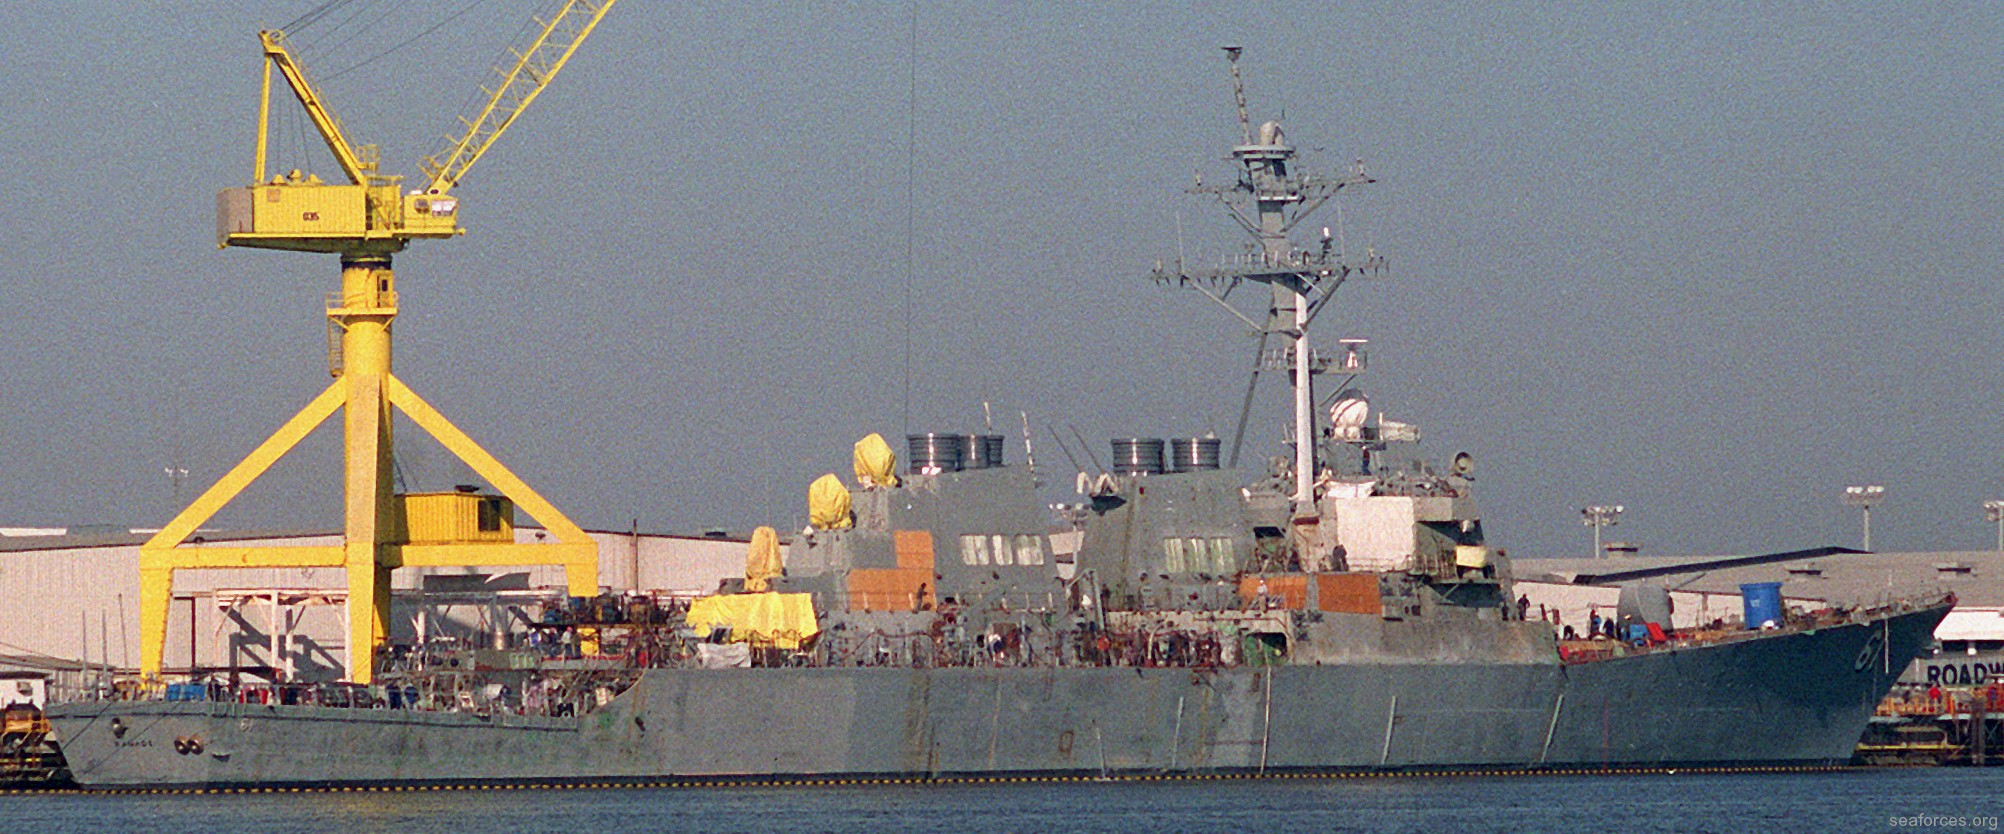 ddg-61 uss ramage guided missile destroyer us navy 68 ingalls shipbuilding pascagoula mississippi